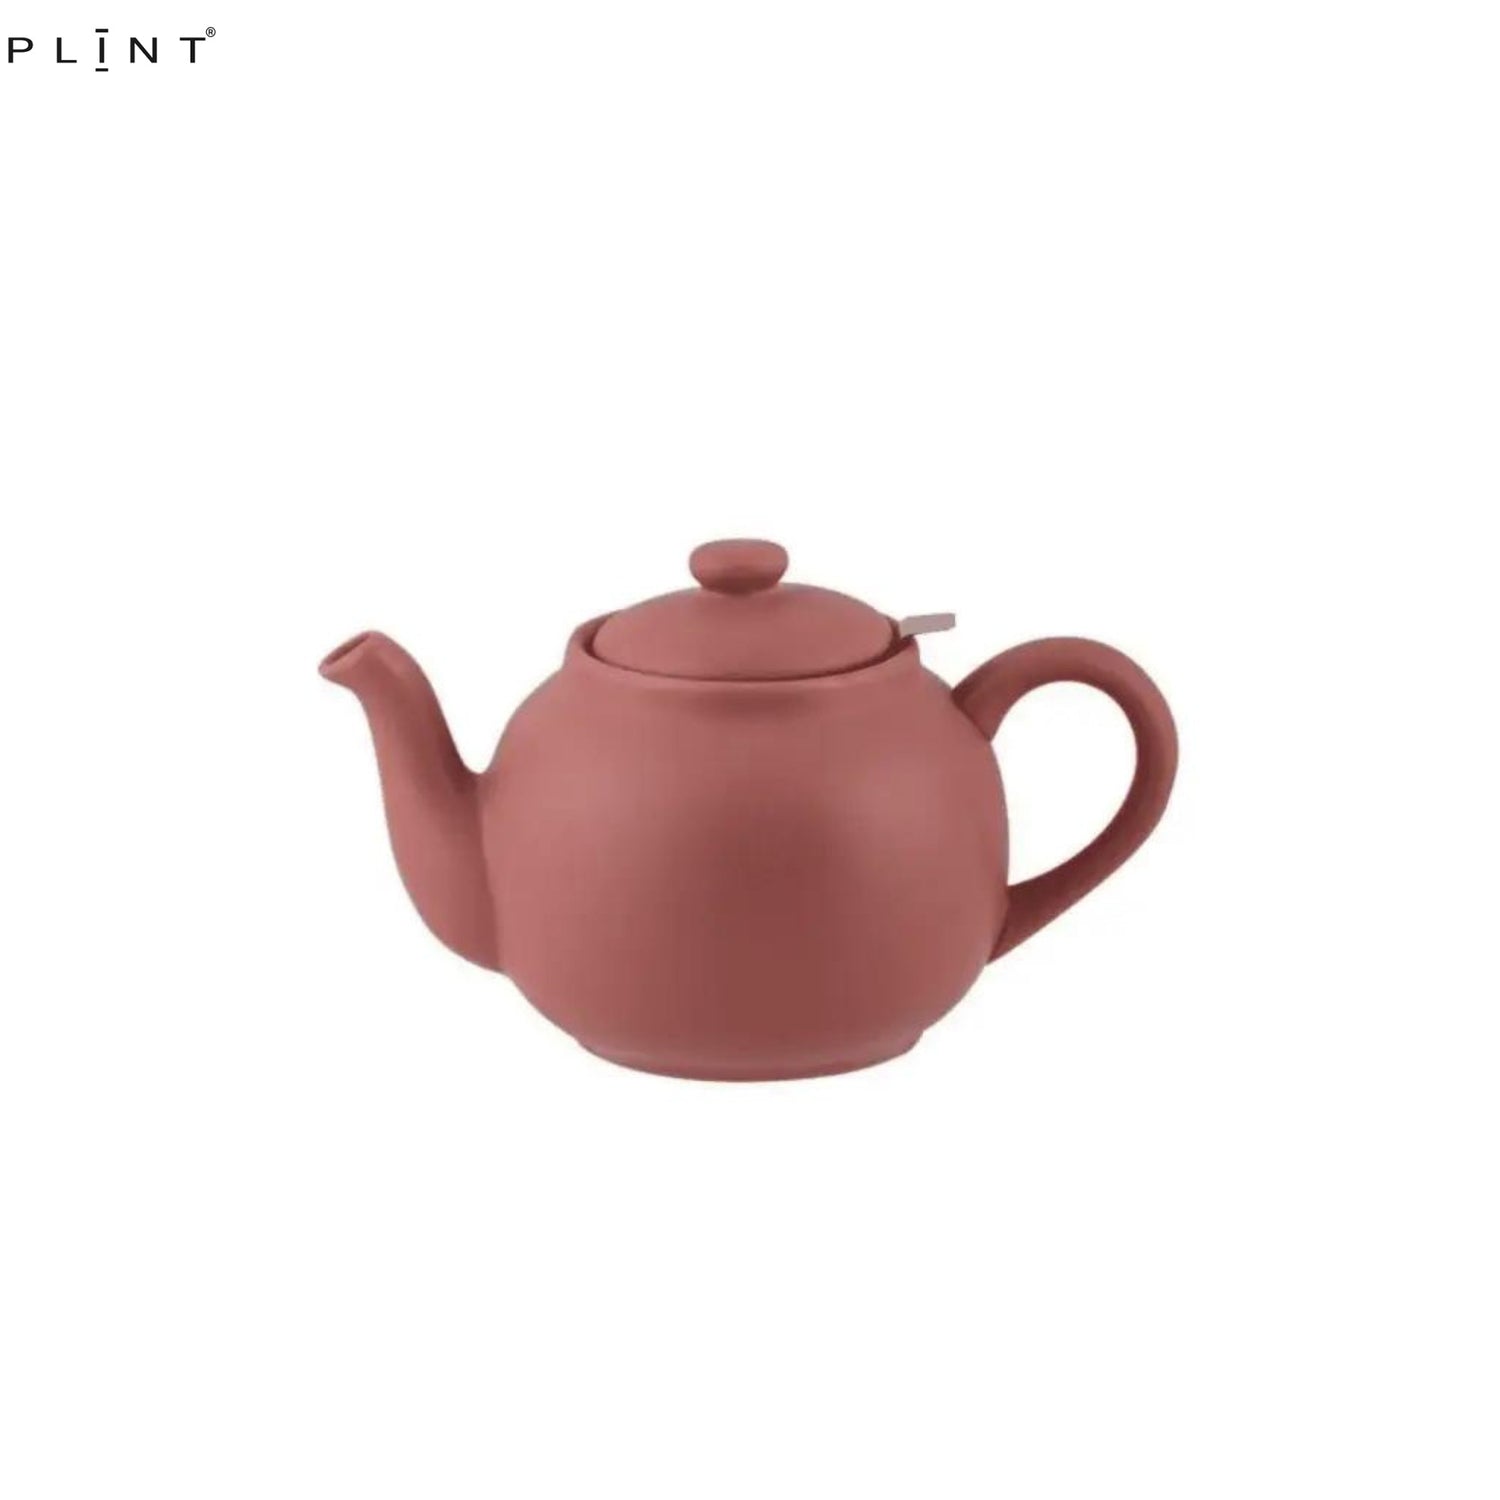 Plint teapot terracotta red 0.9 L including strainer